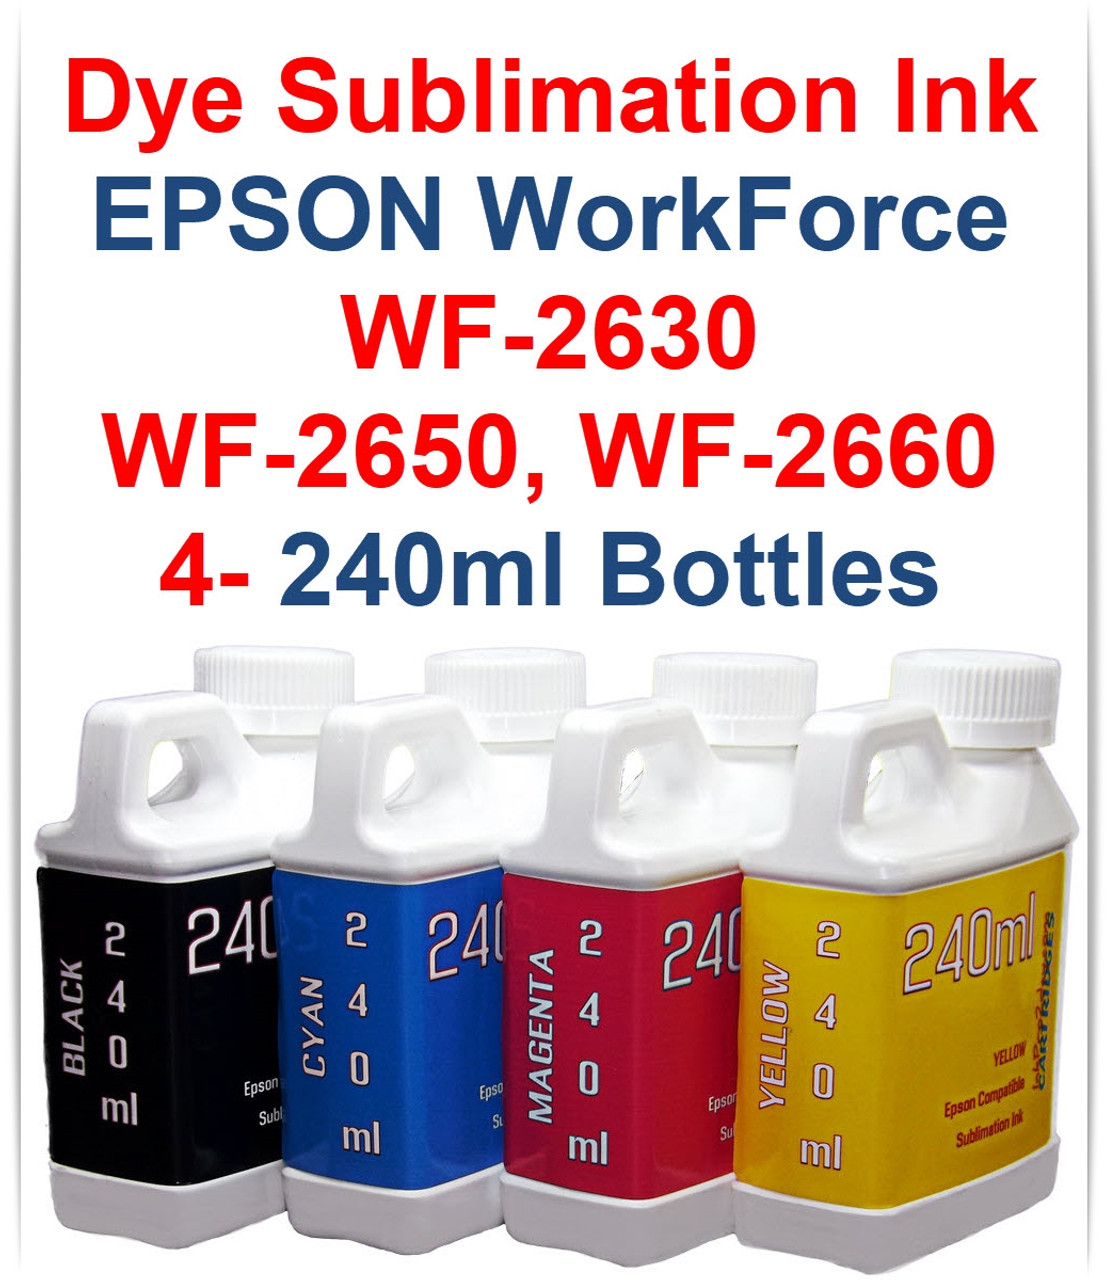 4 240ml Bottles Dye Sublimation Ink For Epson Workforce Wf 2630 Wf 2650 Wf 2660 Printers 3967